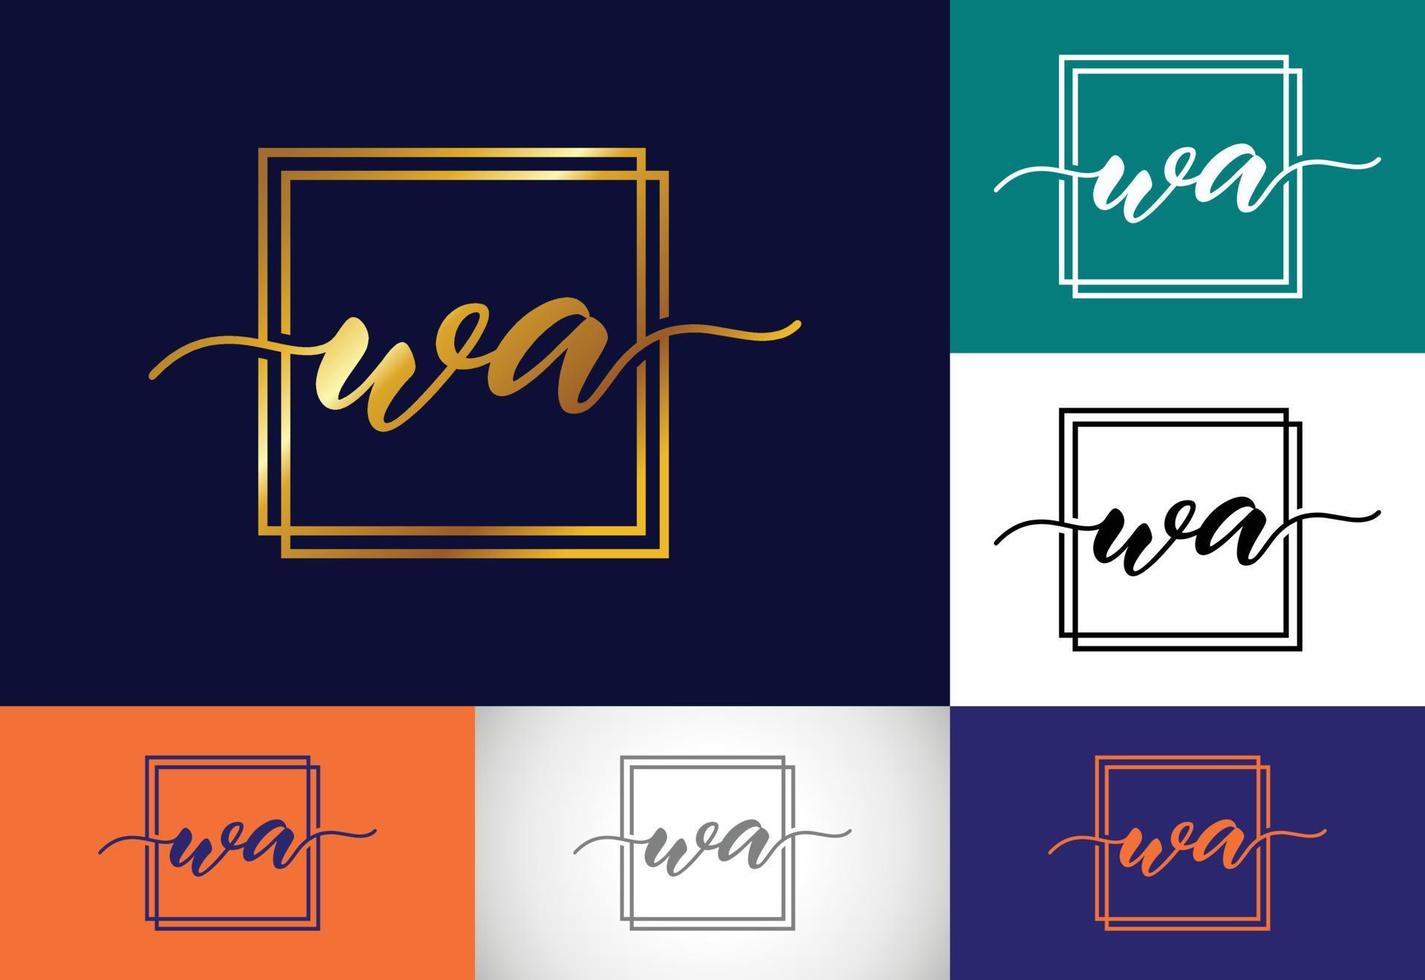 Initial Monogram Letter W A Logo Design Vector Template. WA Letter Logo Design